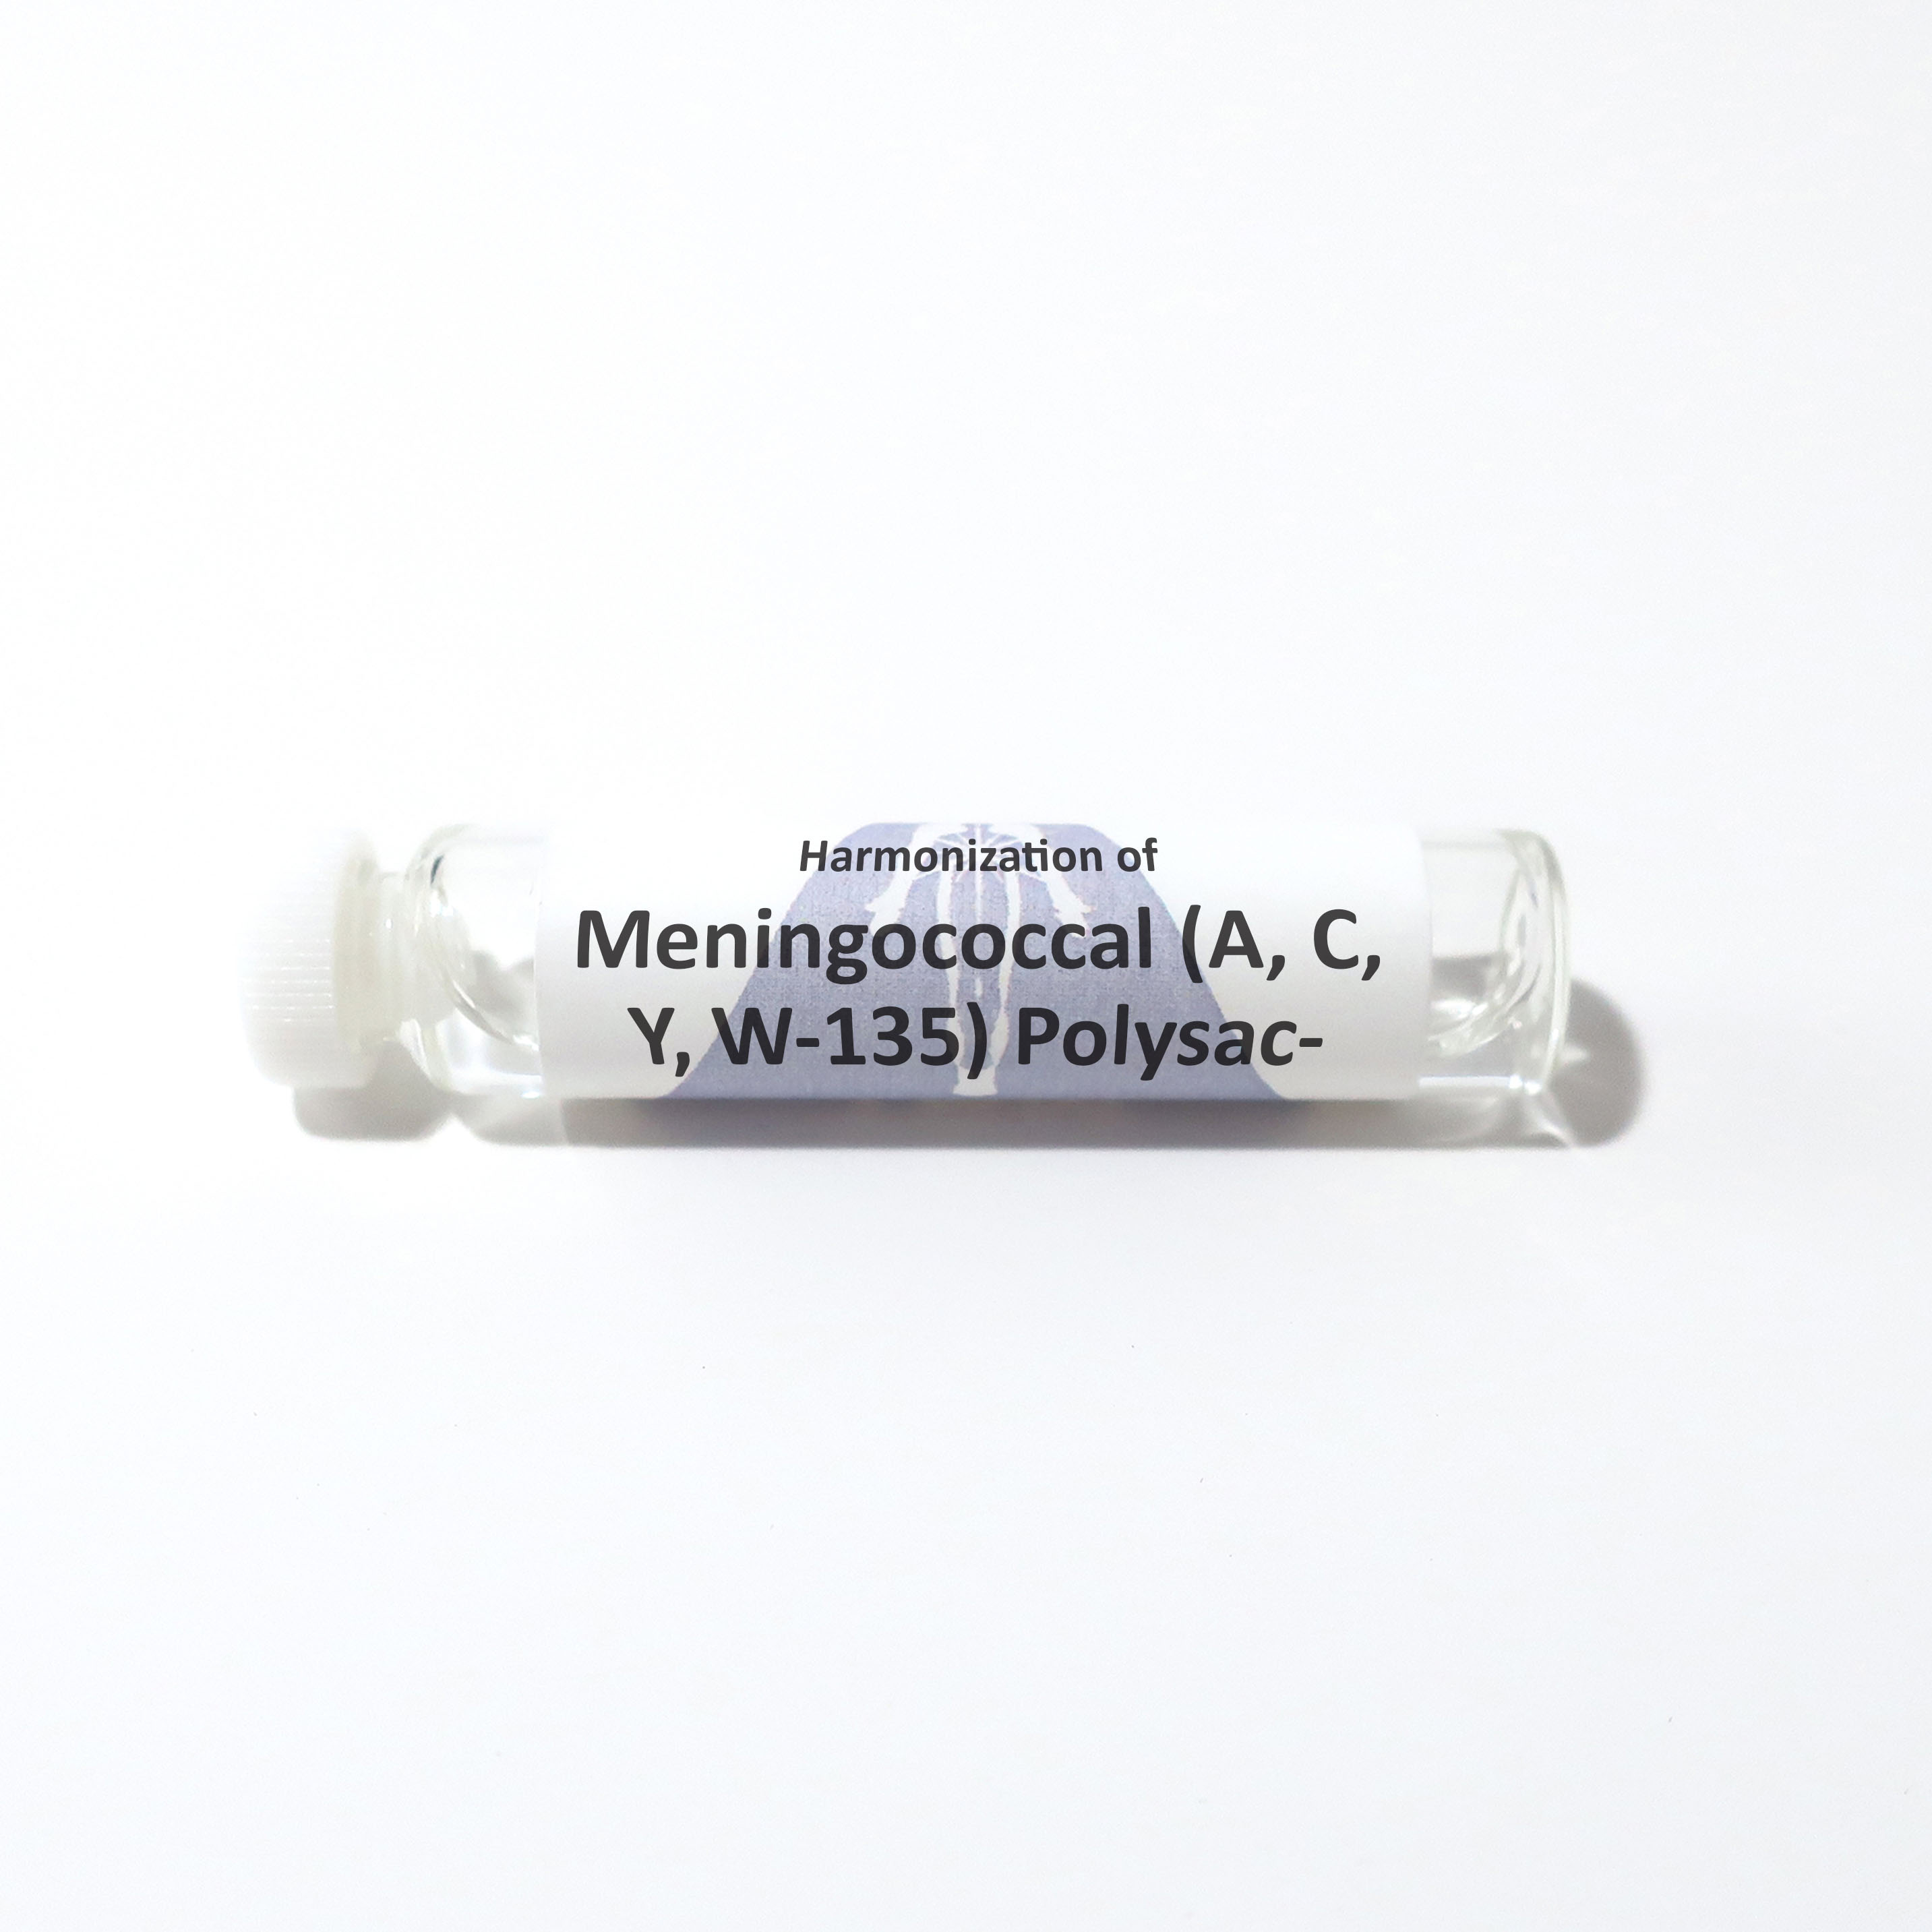 Meningococcal (A, C, Y, W-135) Polysaccharide Diphtheria Toxoid Conjugate Vaccine (Menactra)